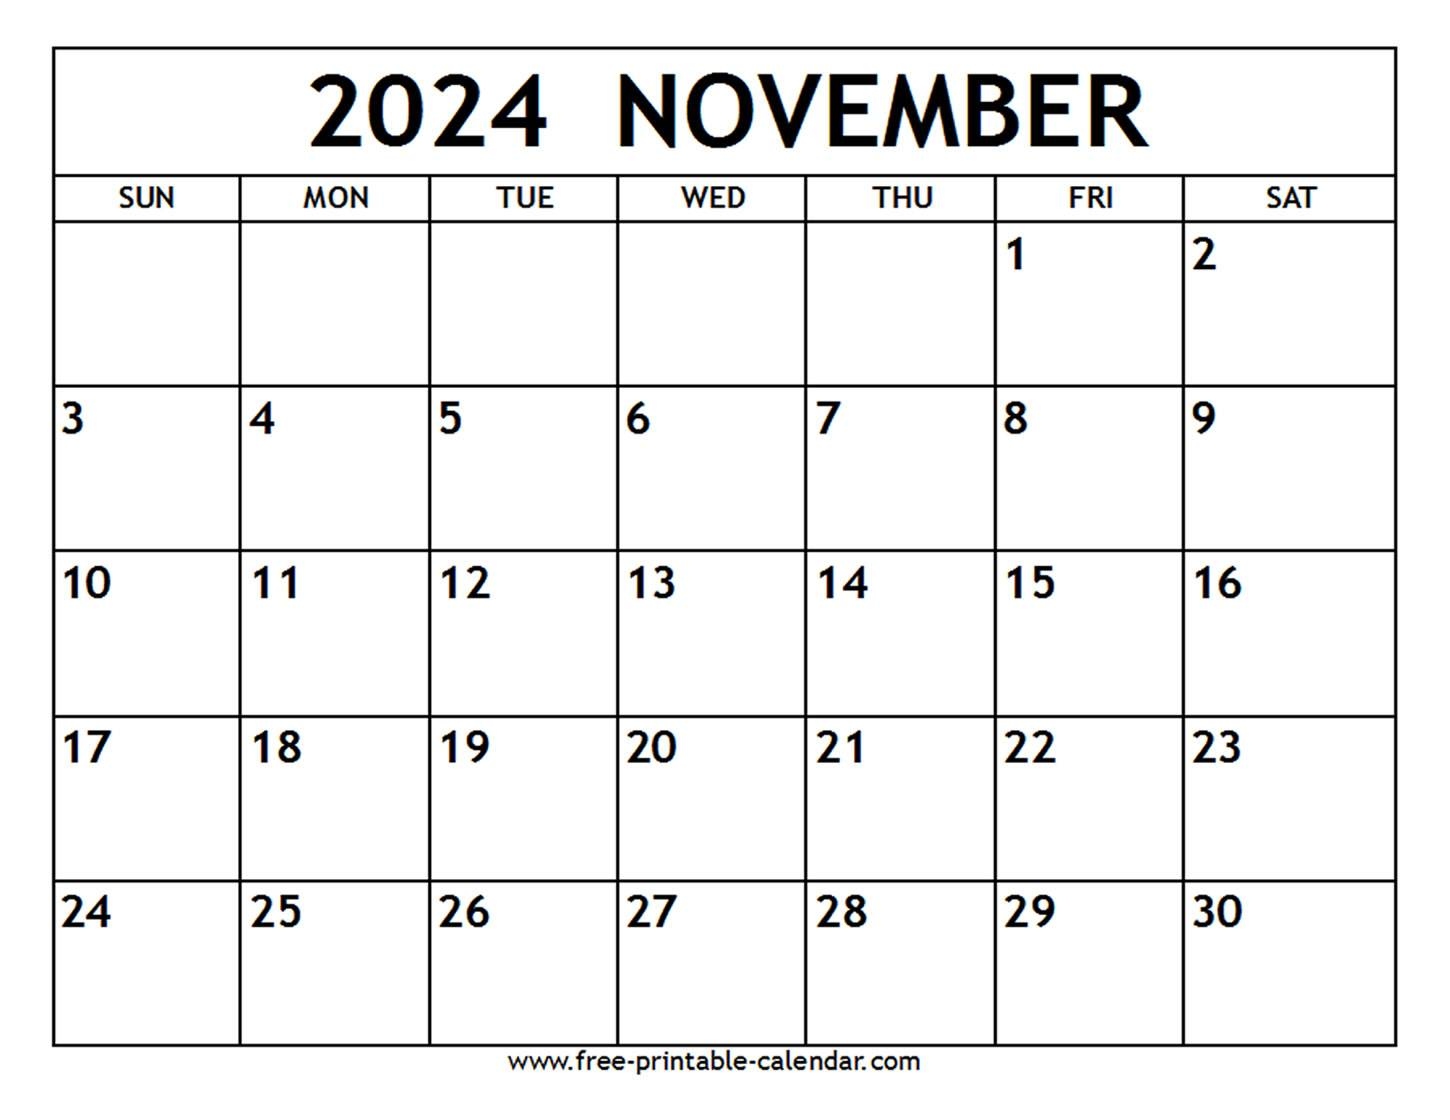 November 2024 Calendar - Free-Printable-Calendar for Free Printable Calendar 2024 November